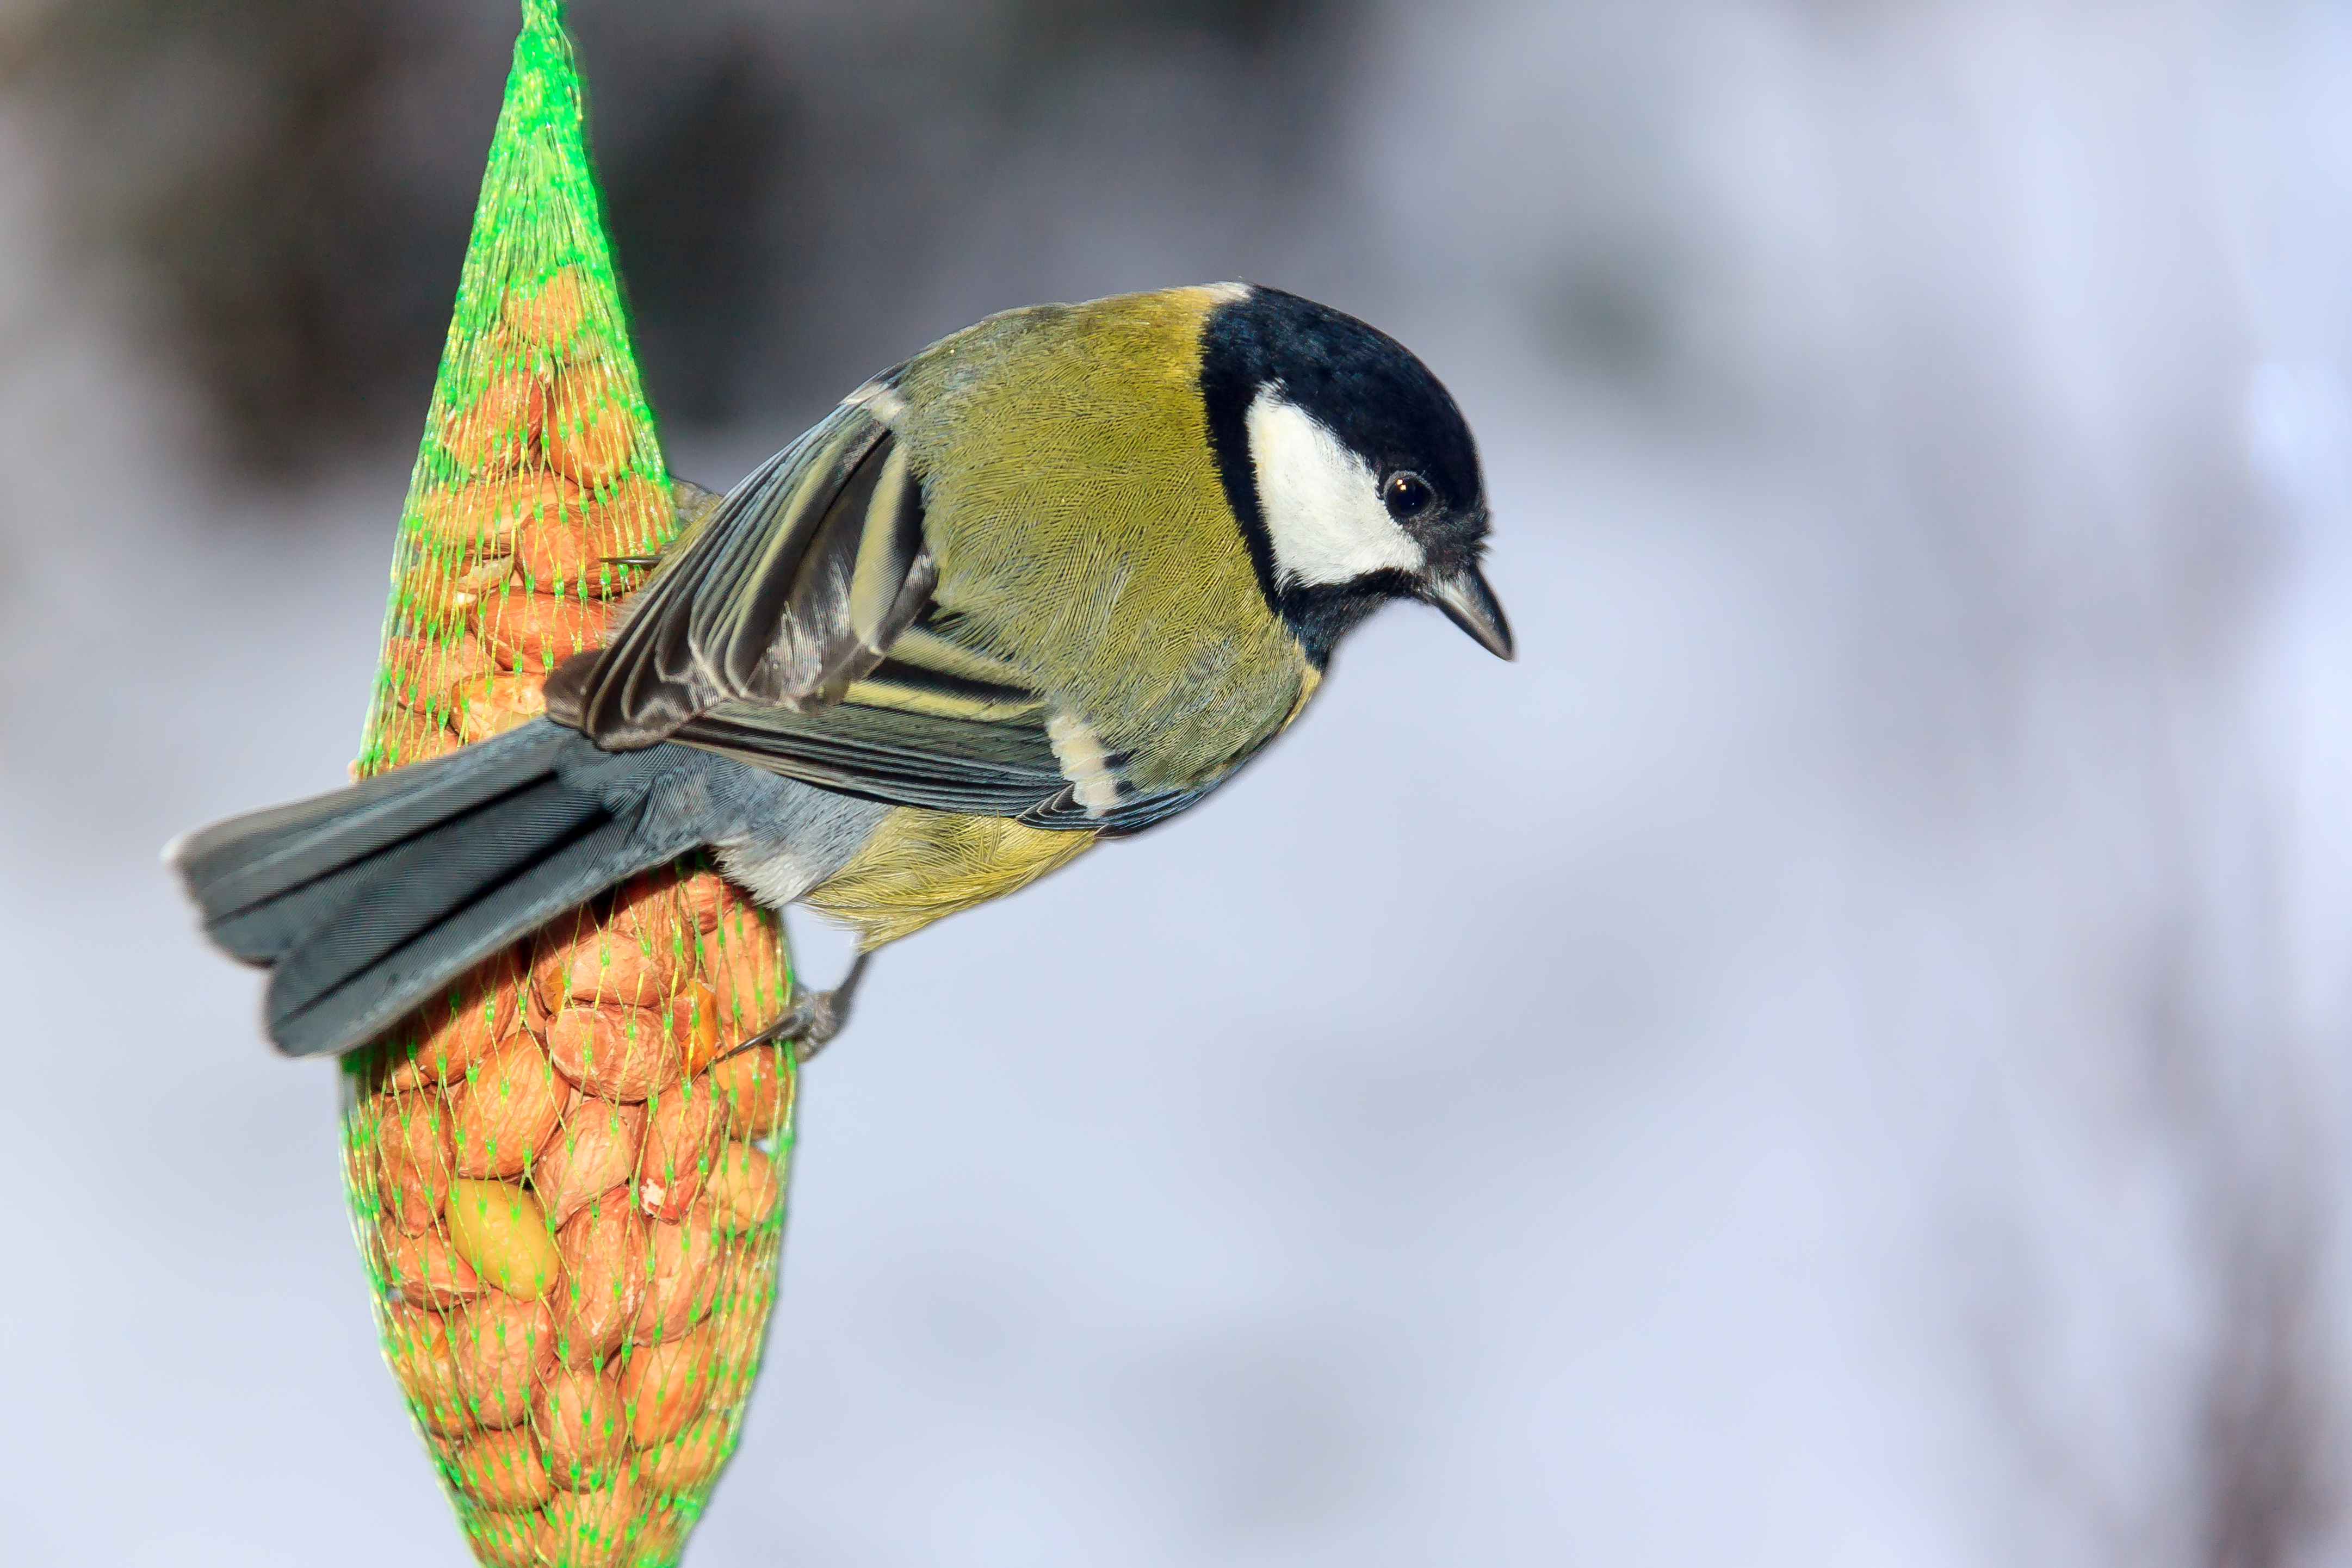 British birds adapt their beaks to birdfeeders